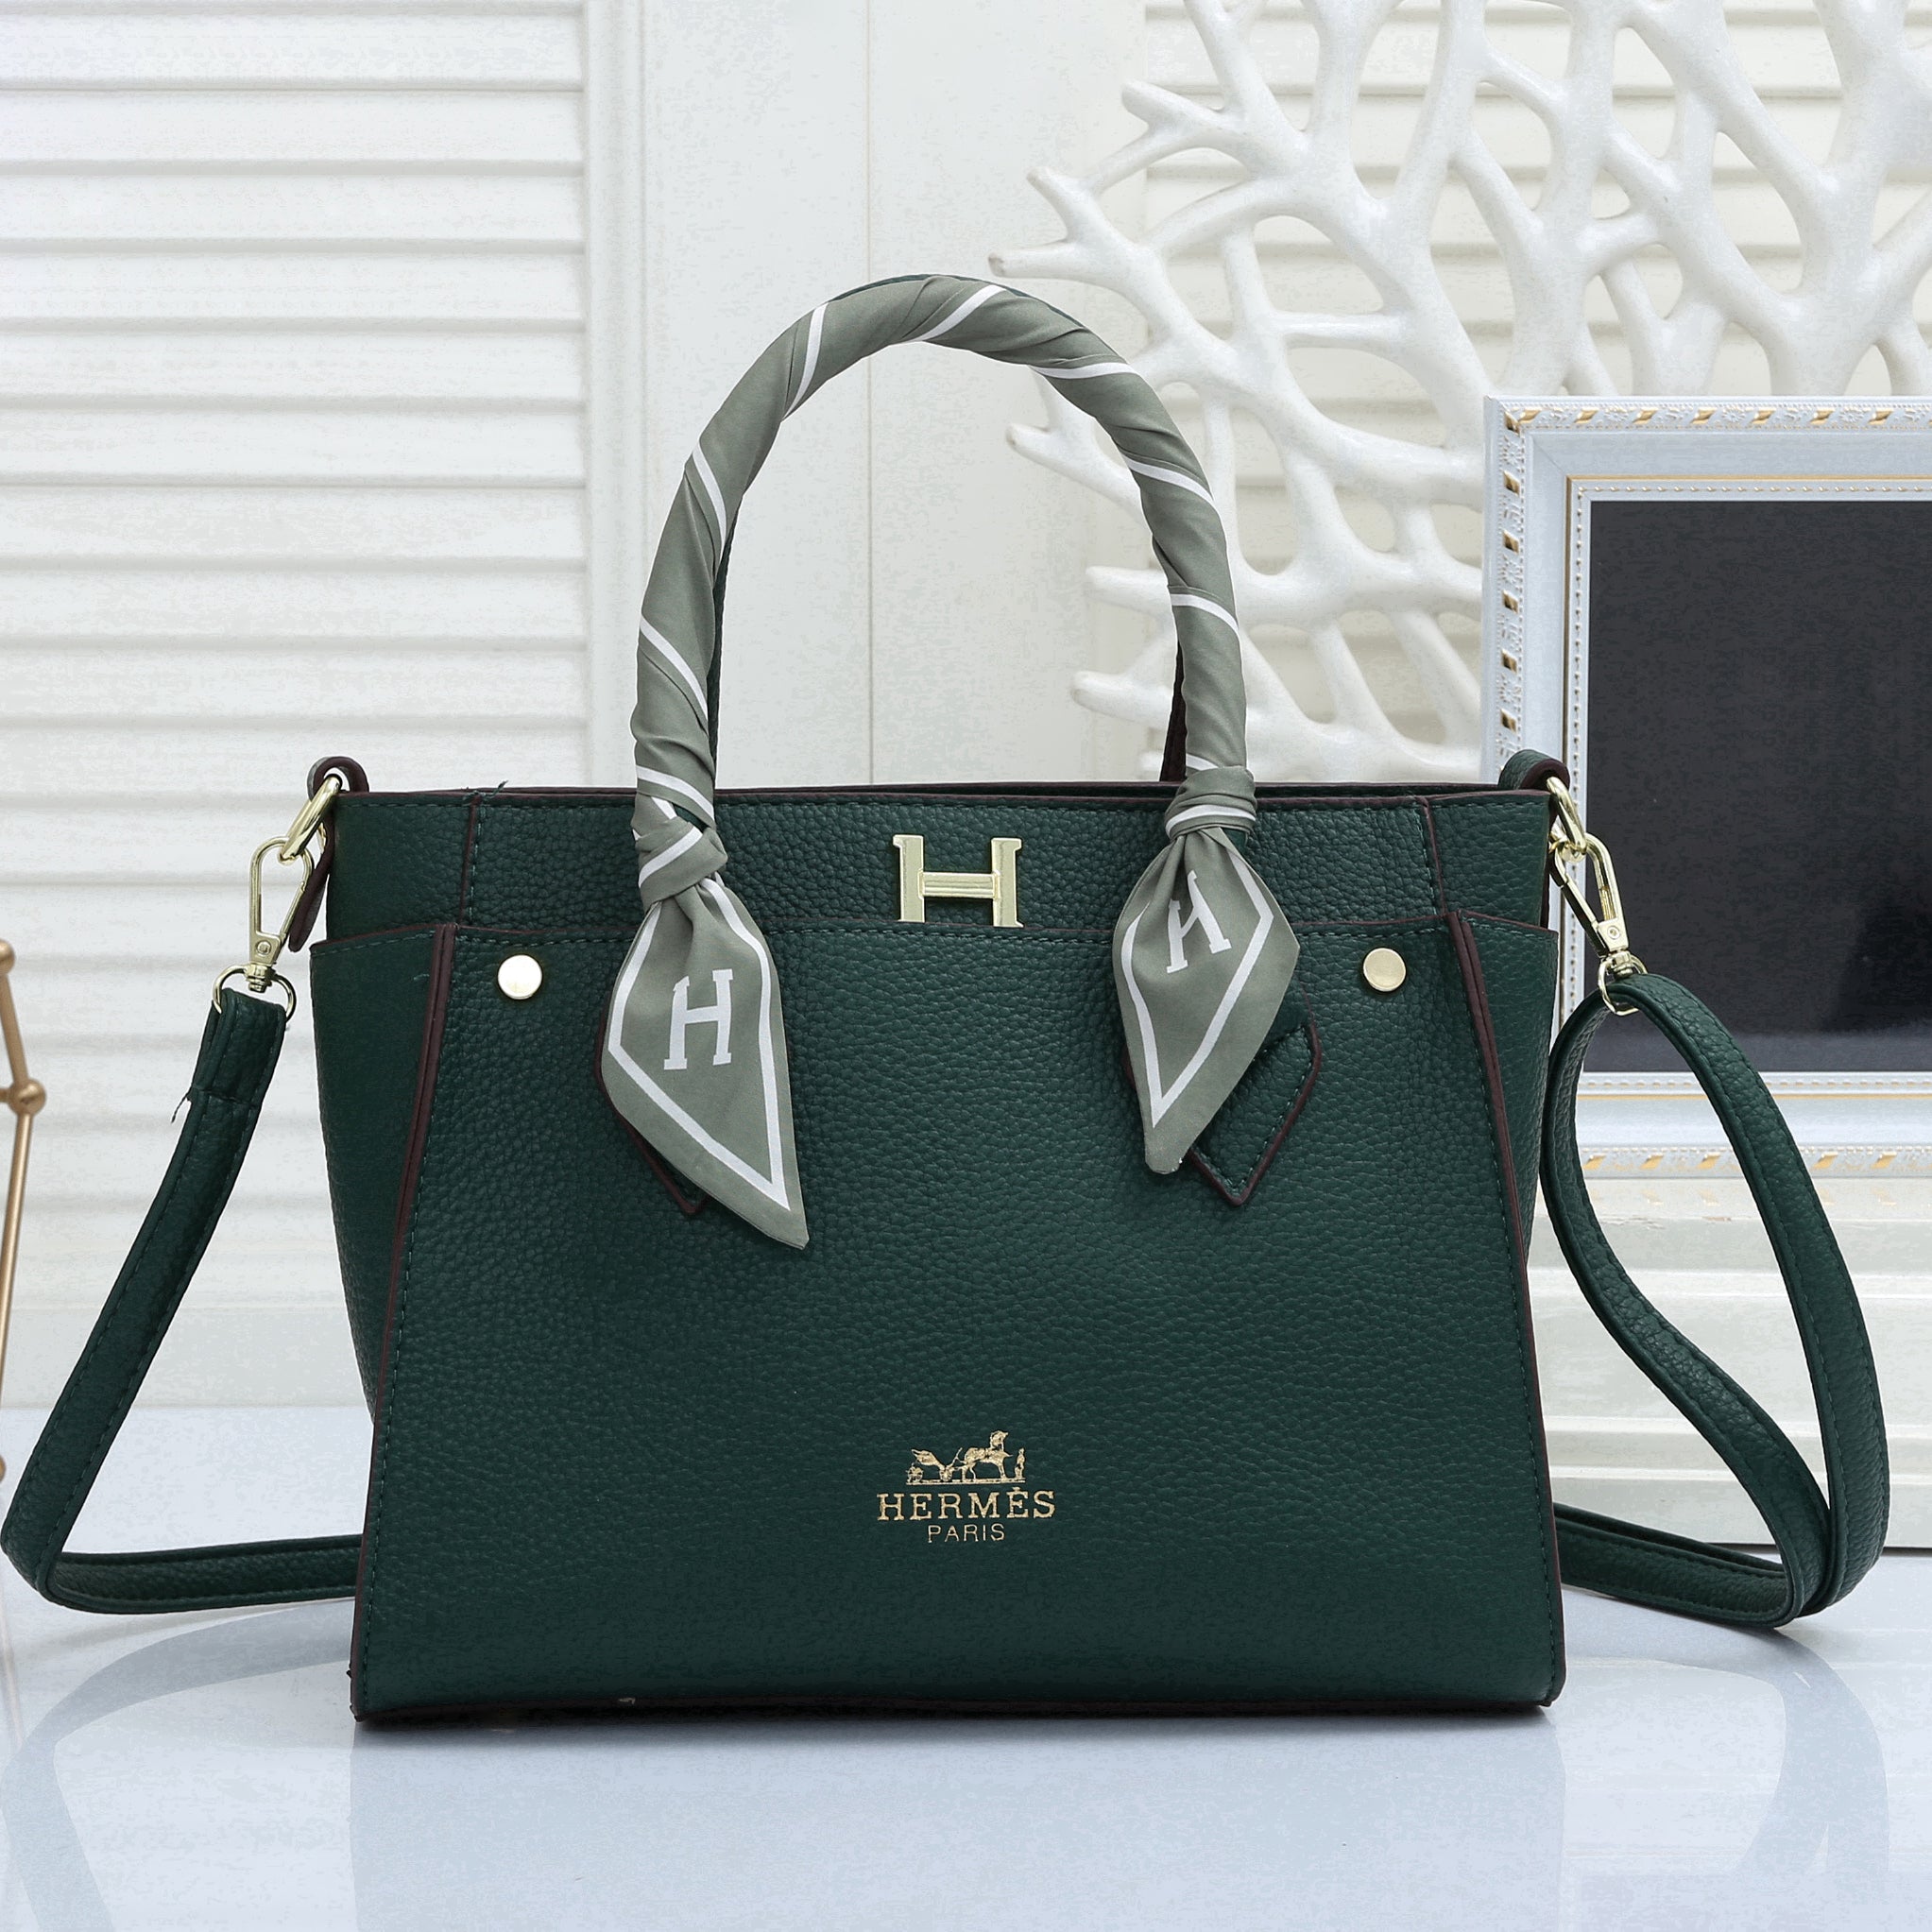 Hermes Fashion Leather Handbag Satchel Tote Bag